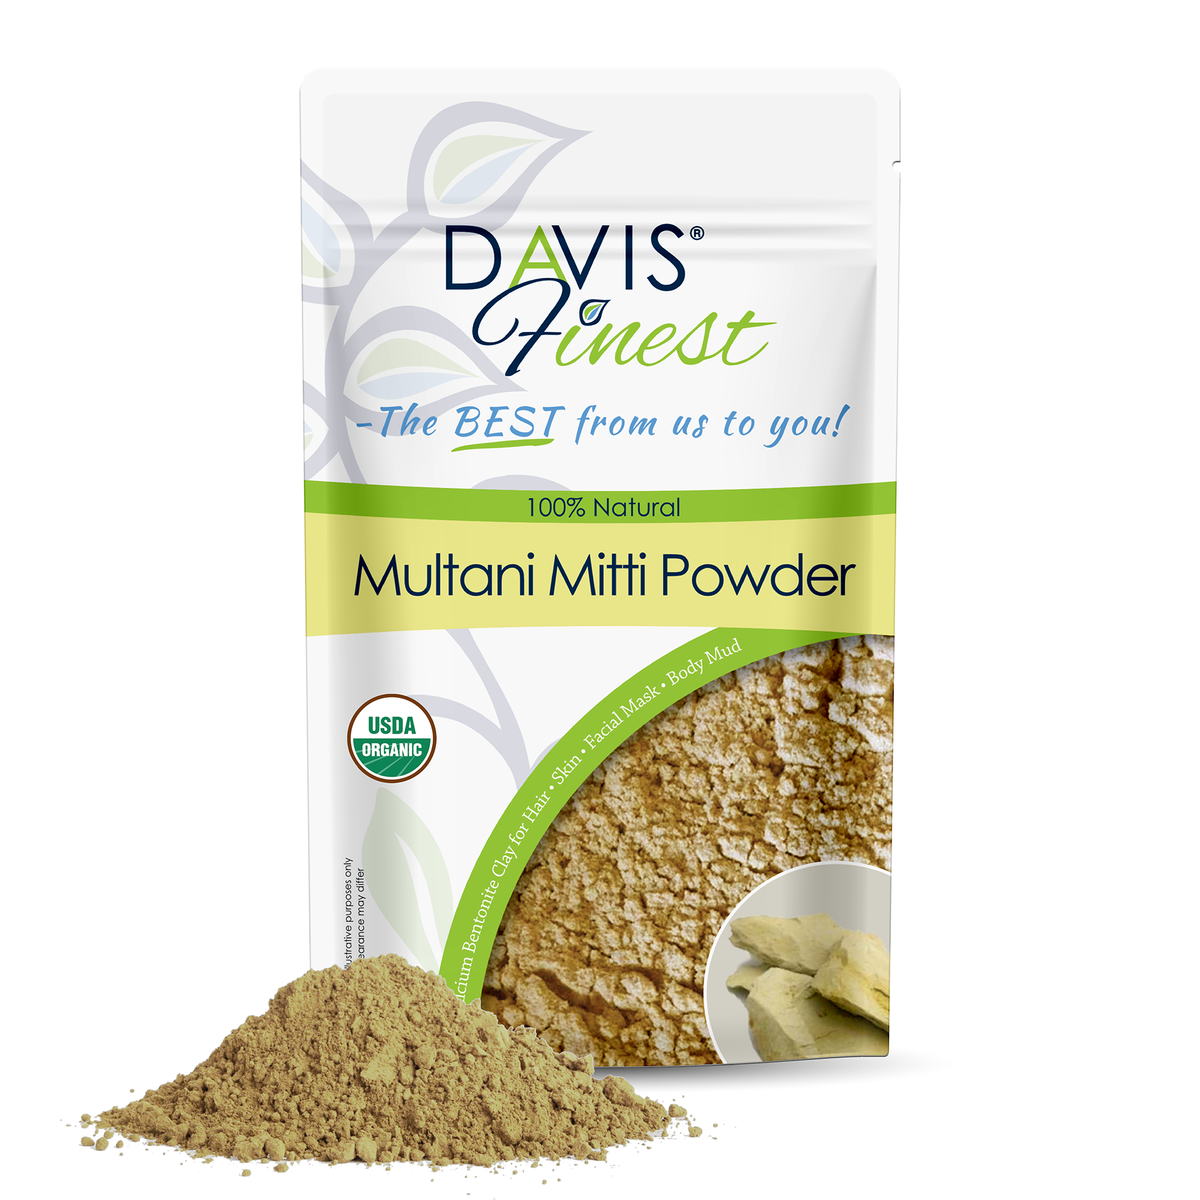 Multani Mitti Powder (Indian Healing Clay)